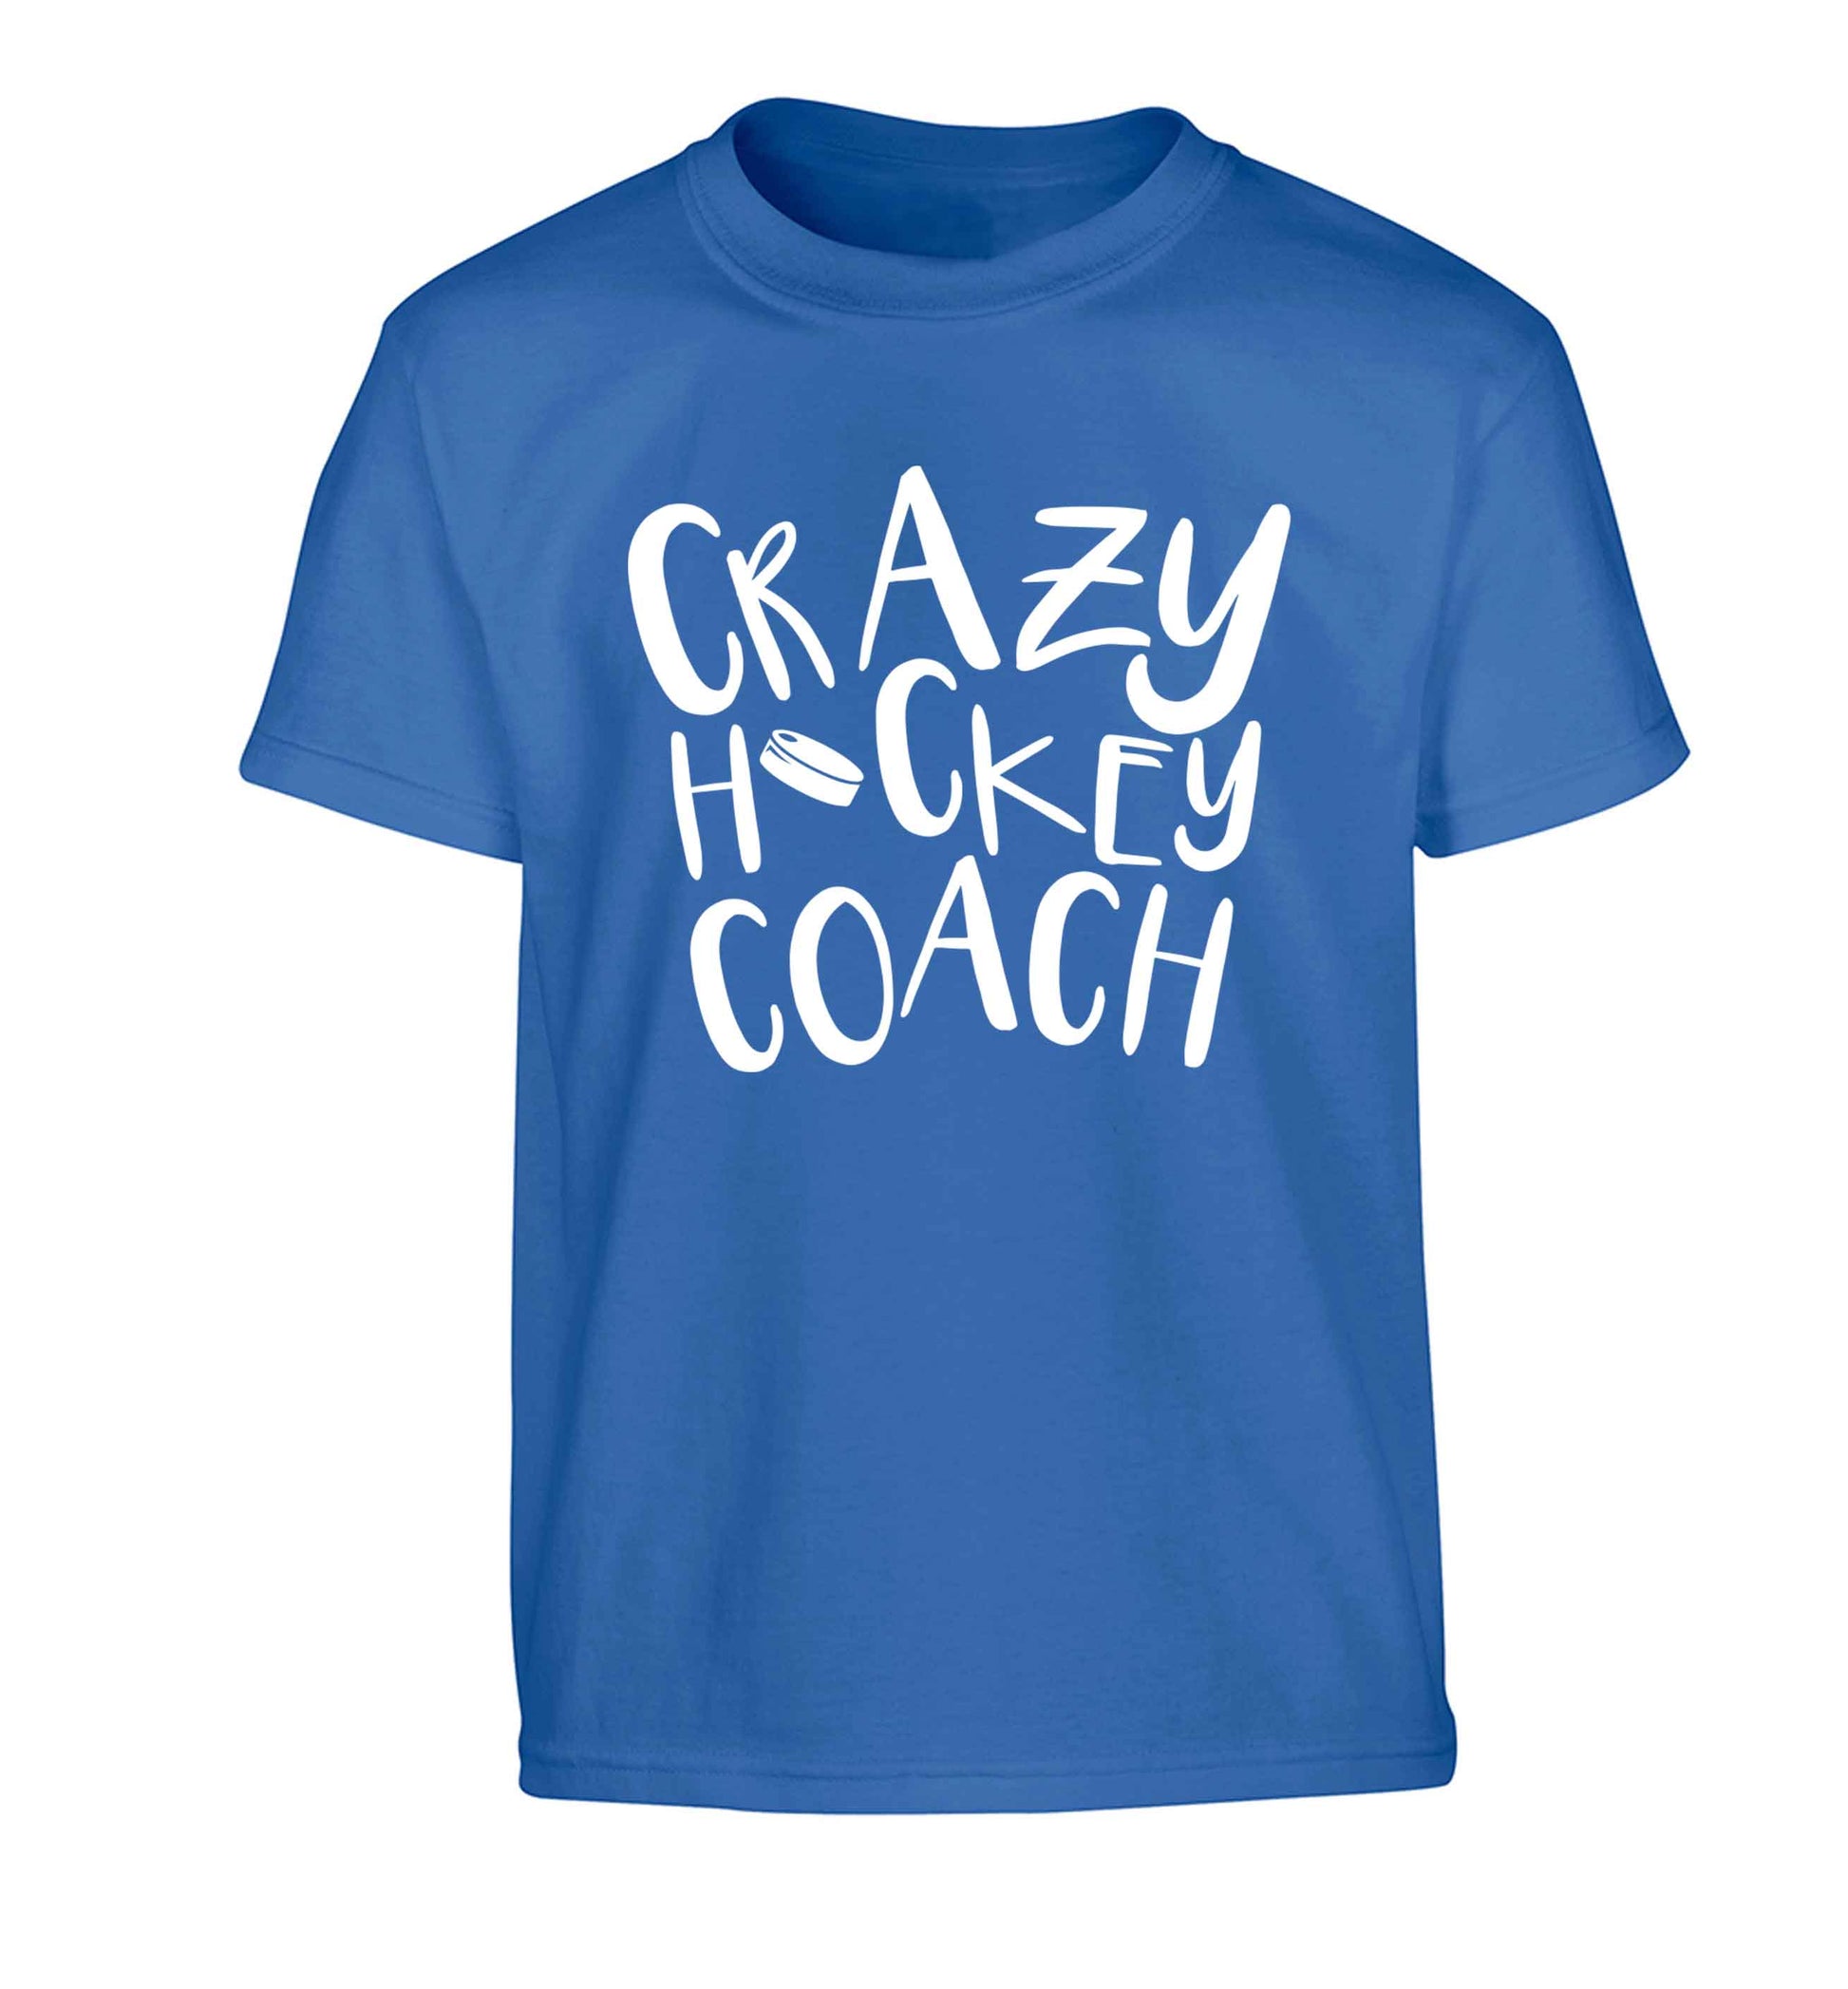 Crazy hockey coach Children's blue Tshirt 12-13 Years